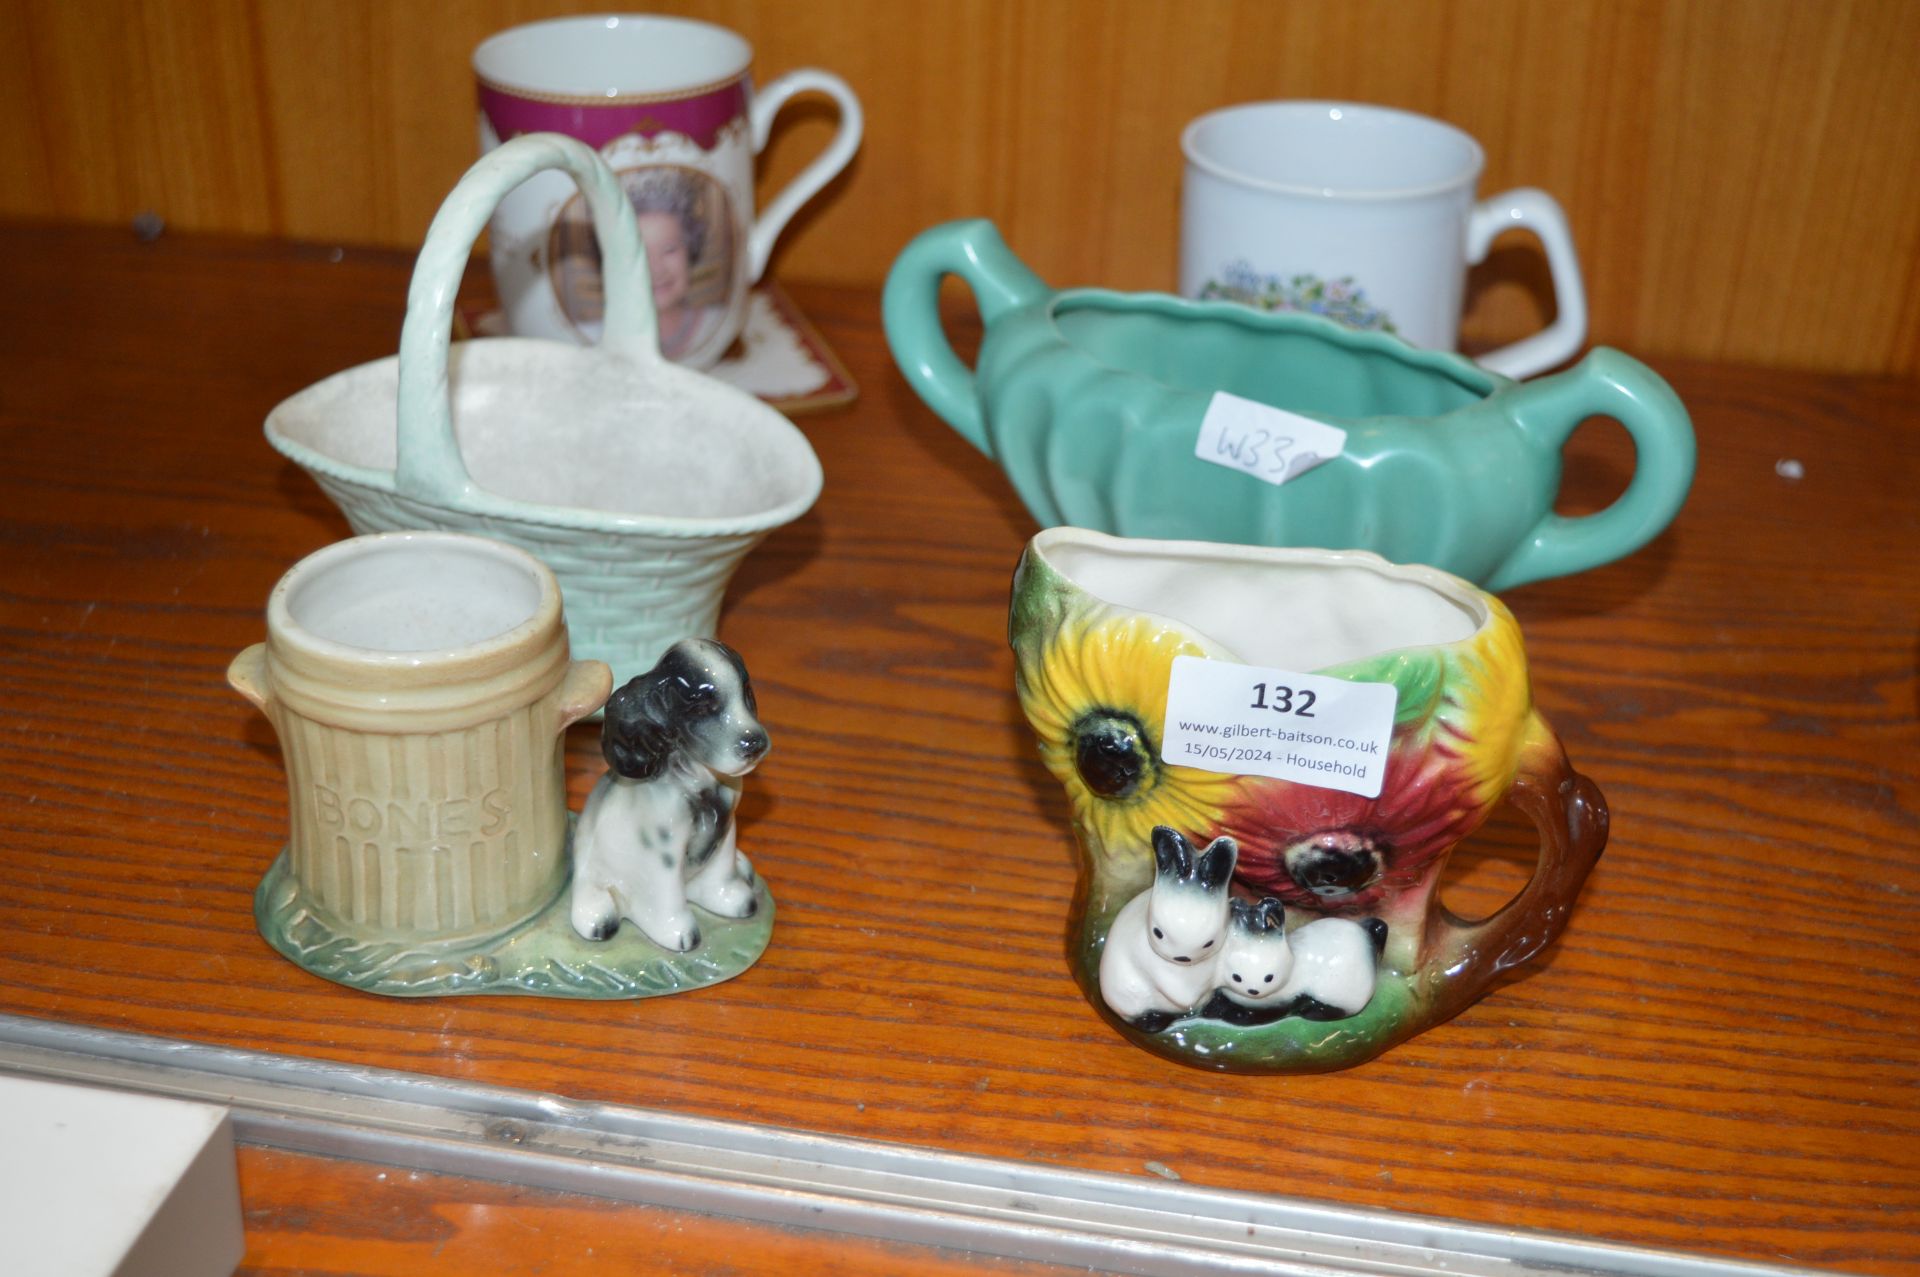 Decorative Posy Holders and Commemorative Mugs